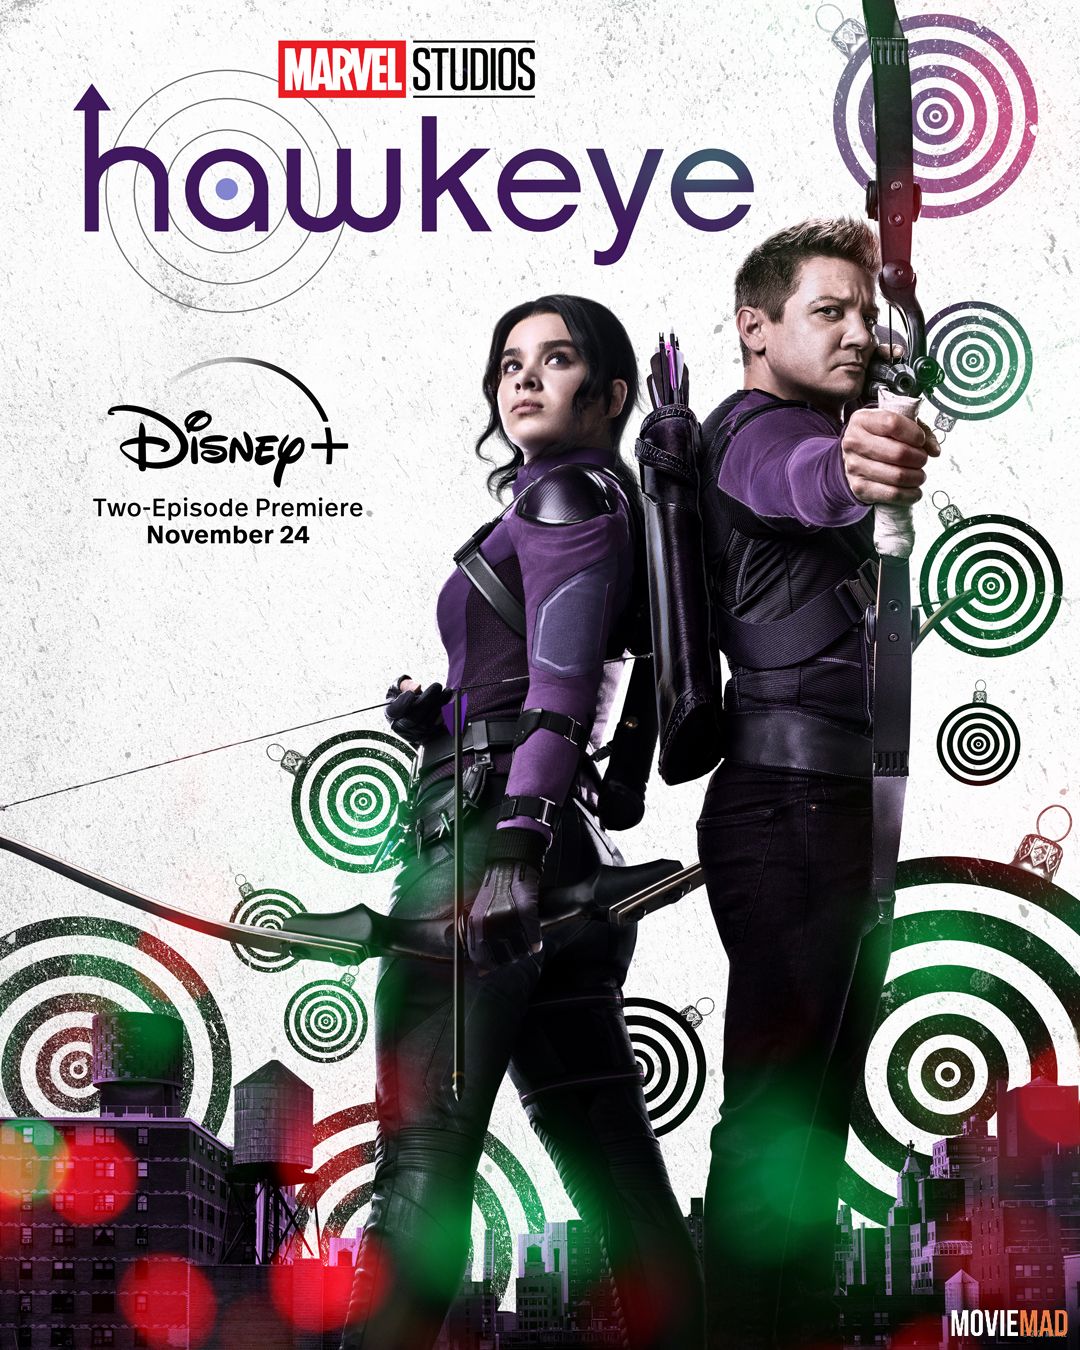 Hawkeye S01E05 (2021) Hindi Dubbed Complete DSPN Series HDRip 1080p 720p 480p